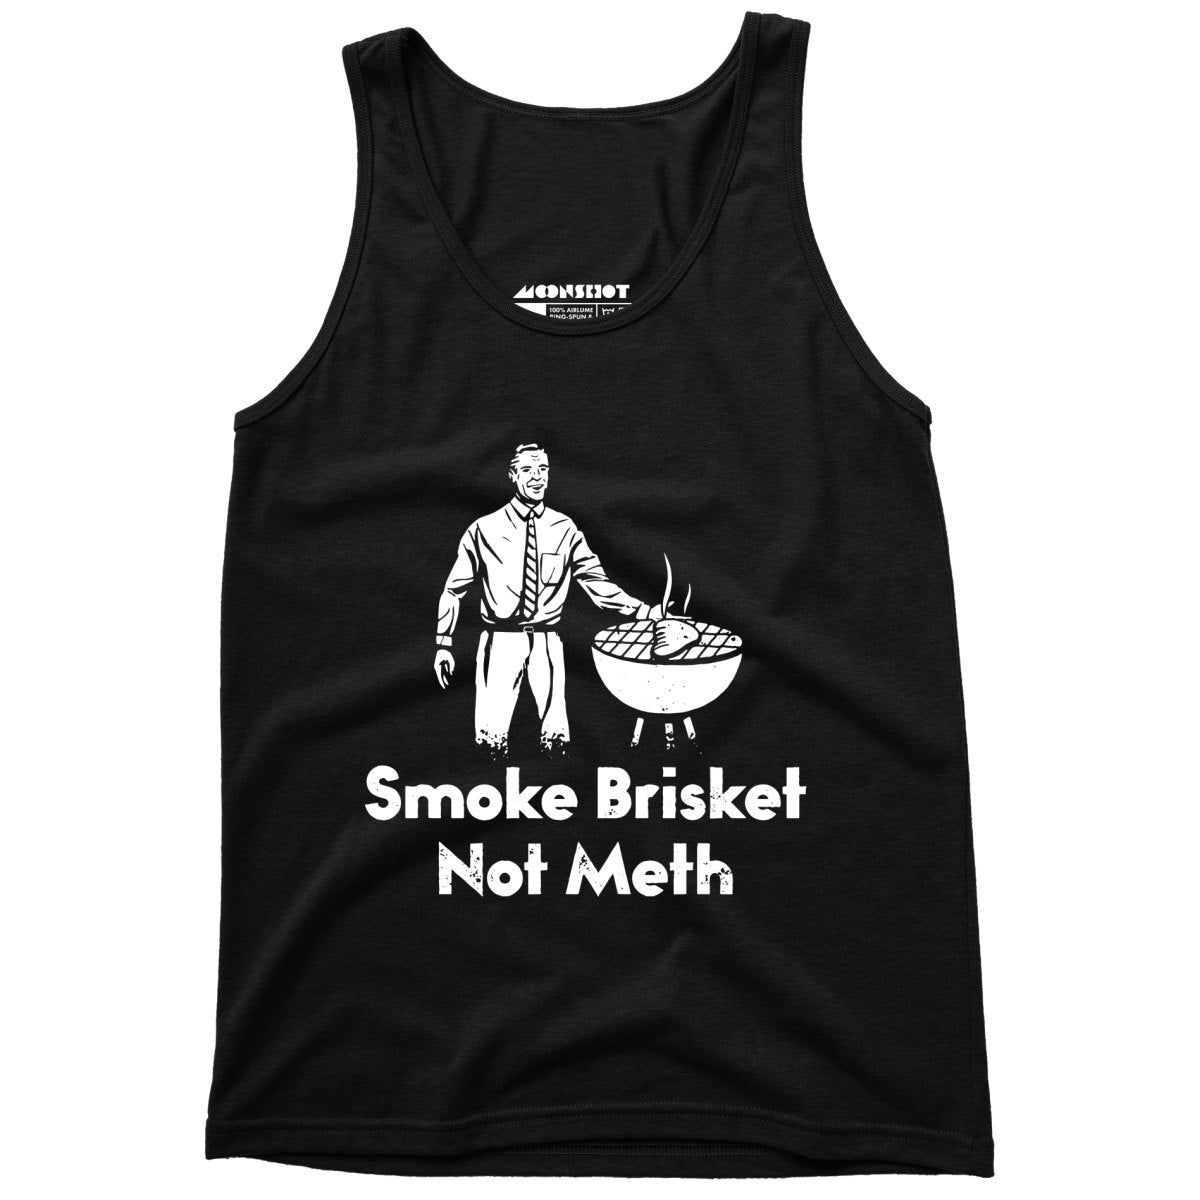 Smoke Brisket Not Meth v2 - Unisex Tank Top